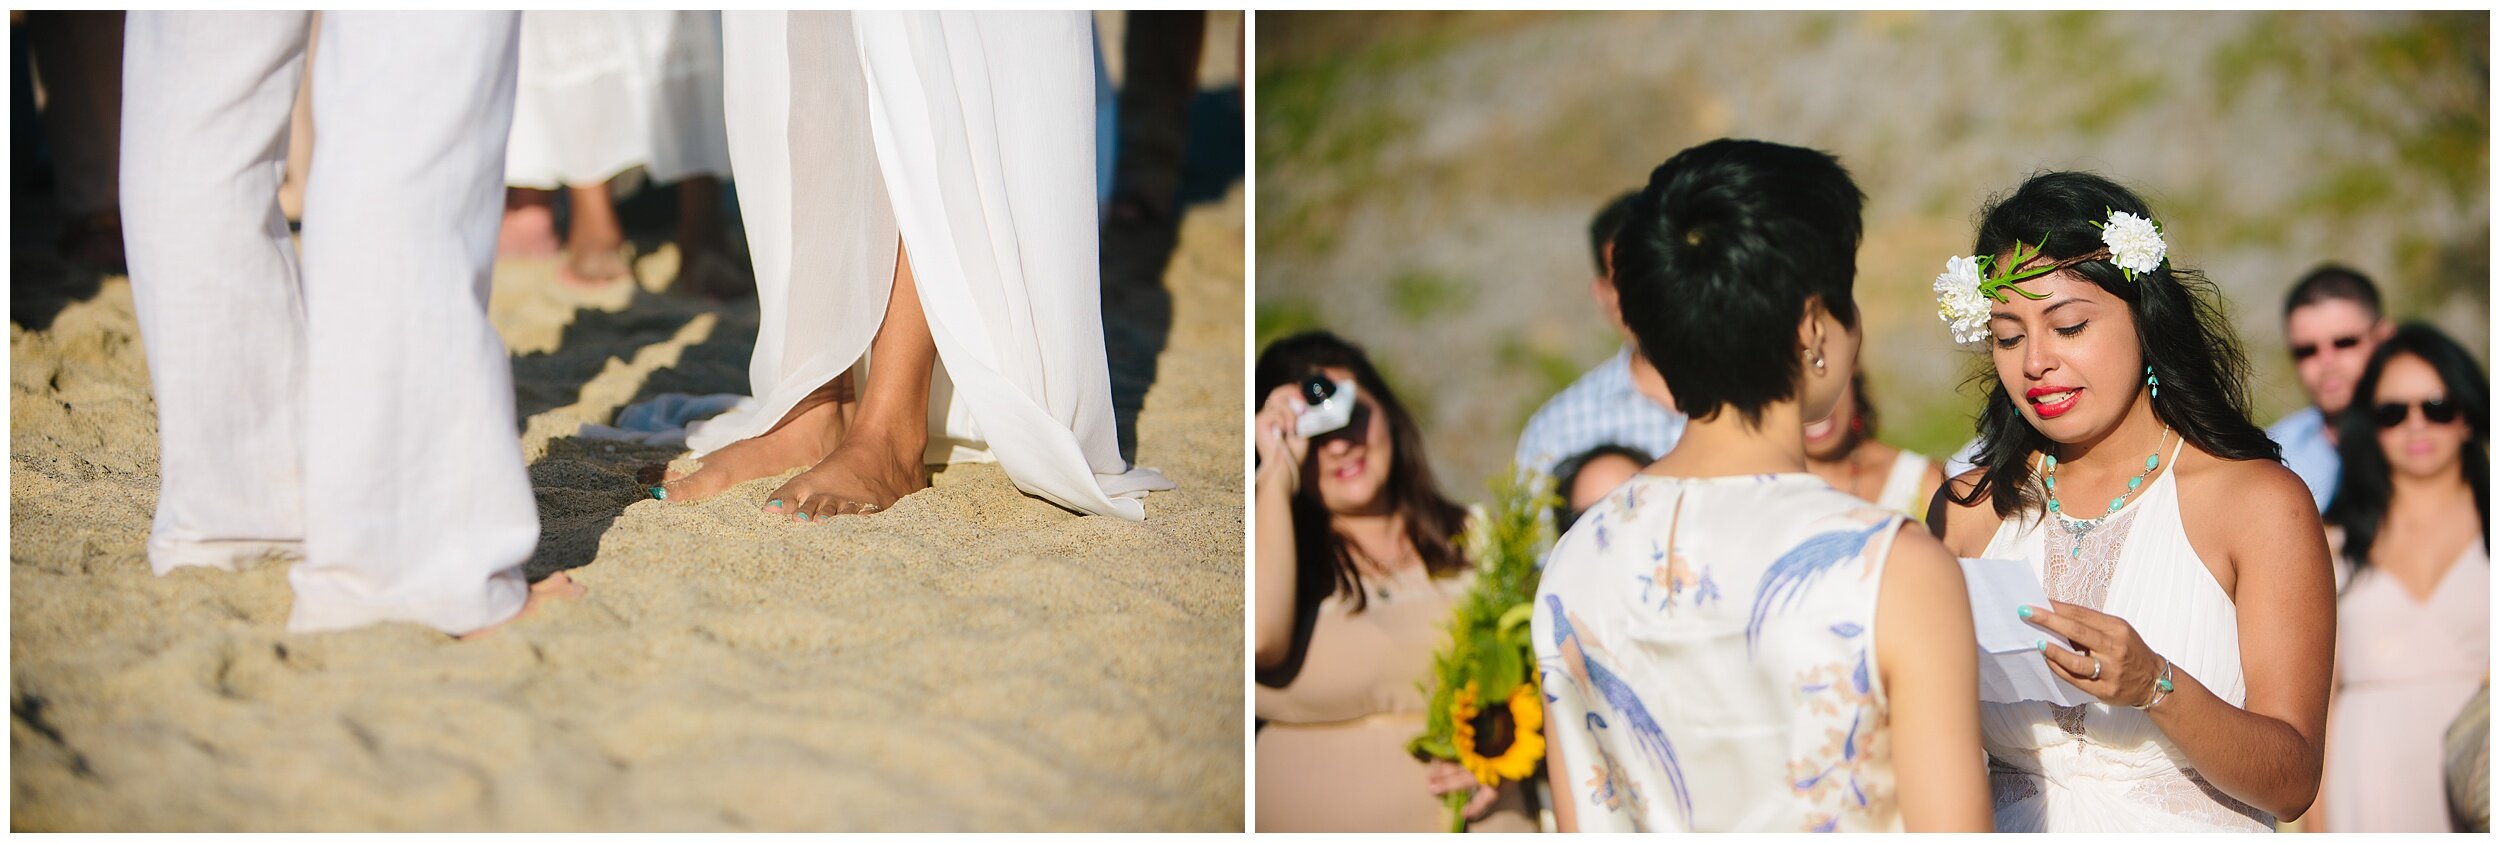 Adventure Wedding Photographer Santa Monica Beach_0127.jpg